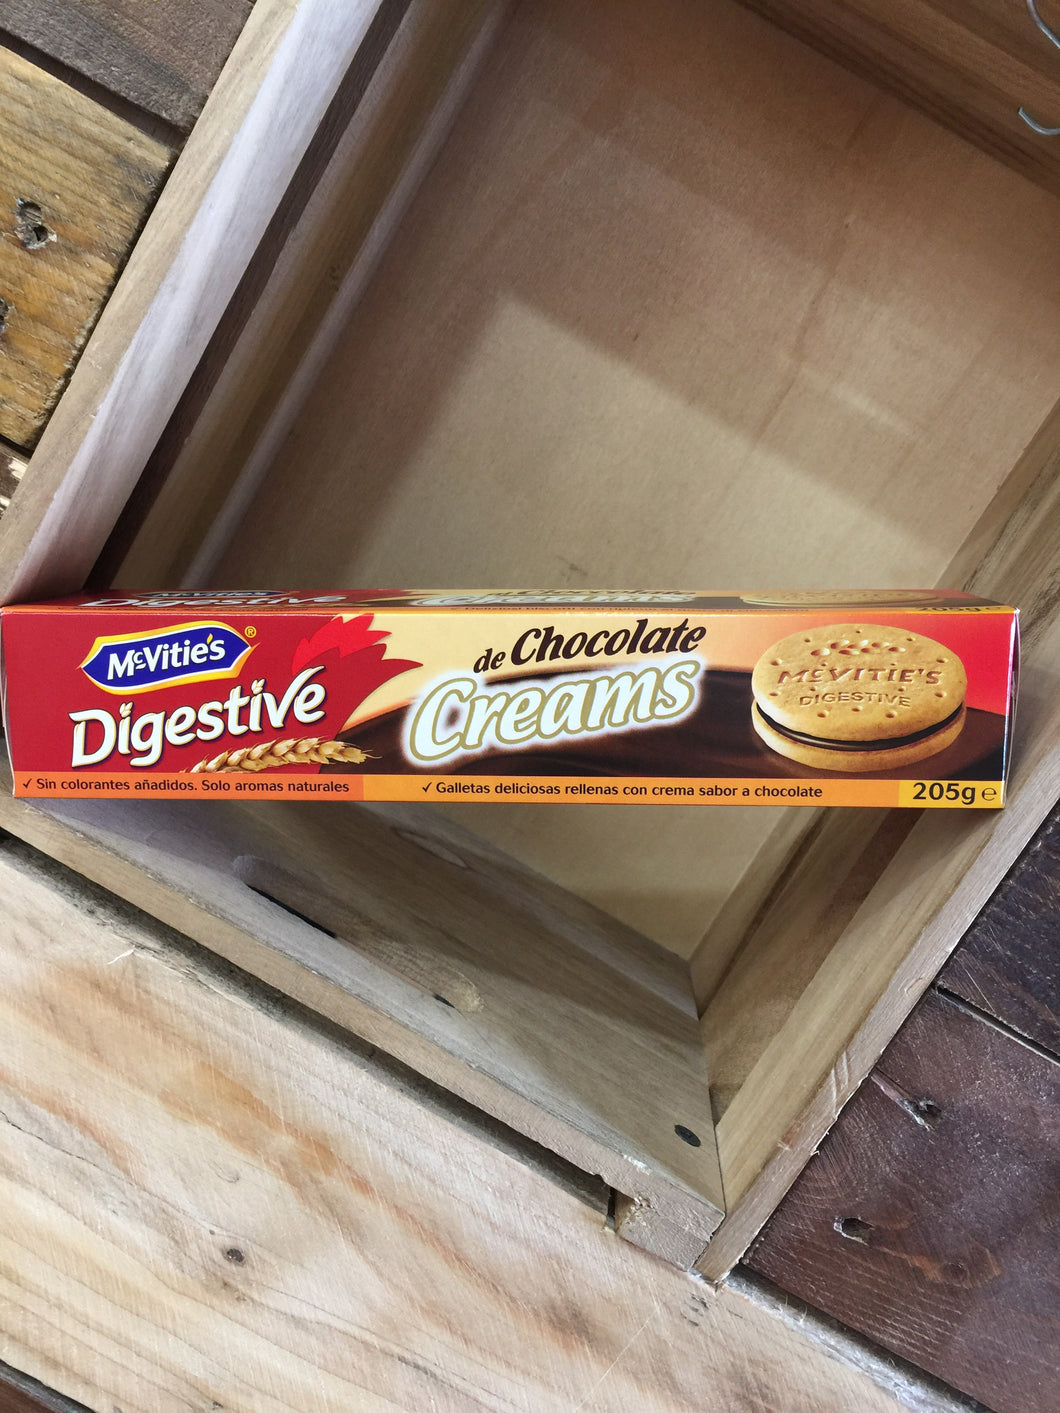 McVitie's Digestive Chocolate Creams 205g